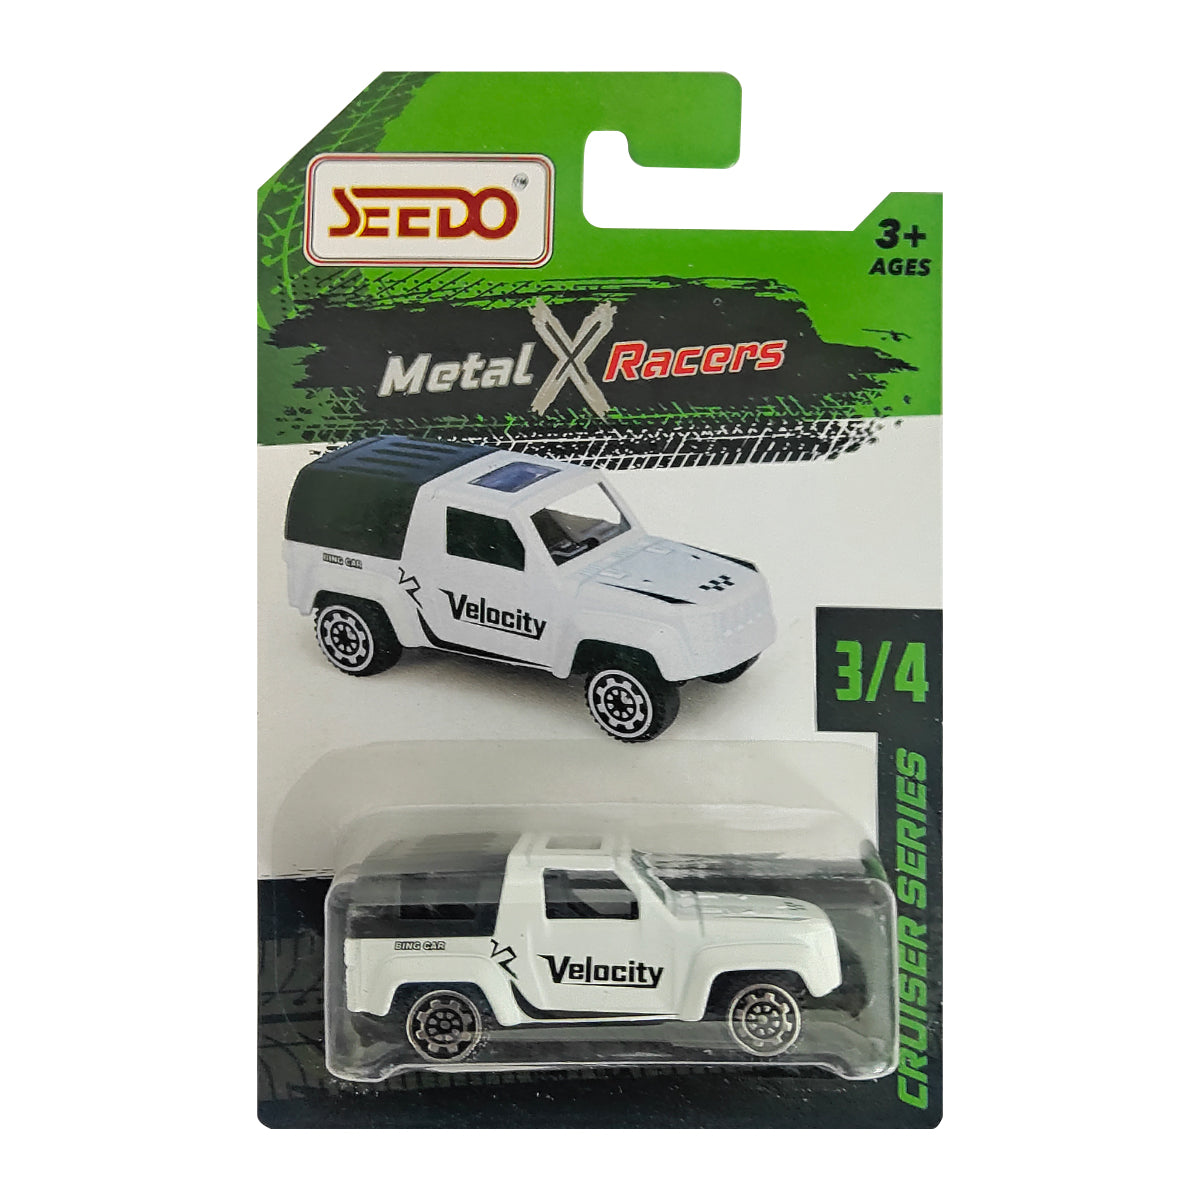 Seedo Metal X Racers Cruiser Series Die Cast Car for Ages 3+, Pack Of 4